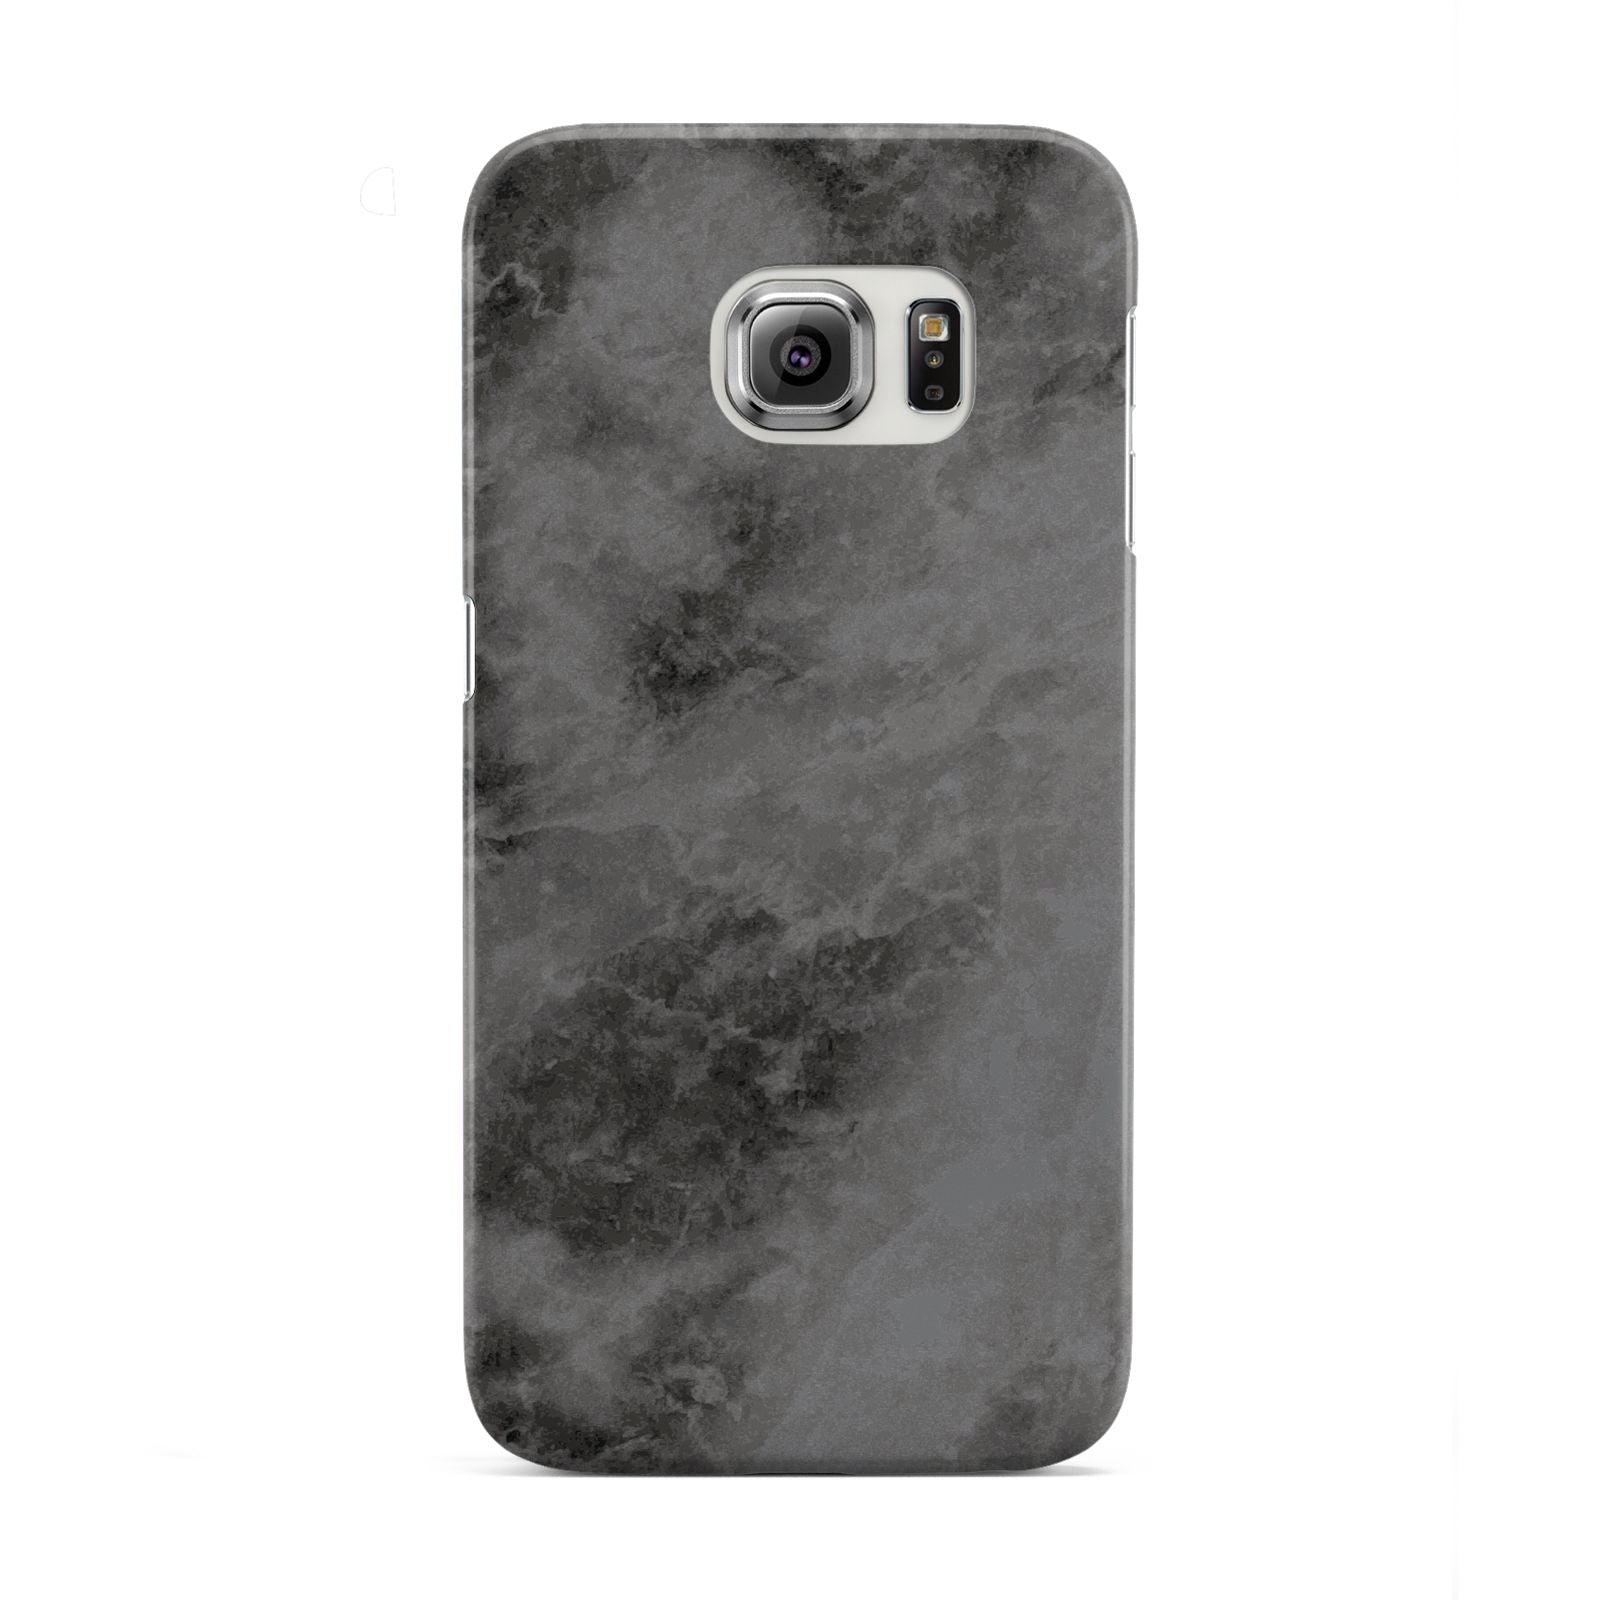 Faux Marble Grey Black Samsung Galaxy S6 Edge Case